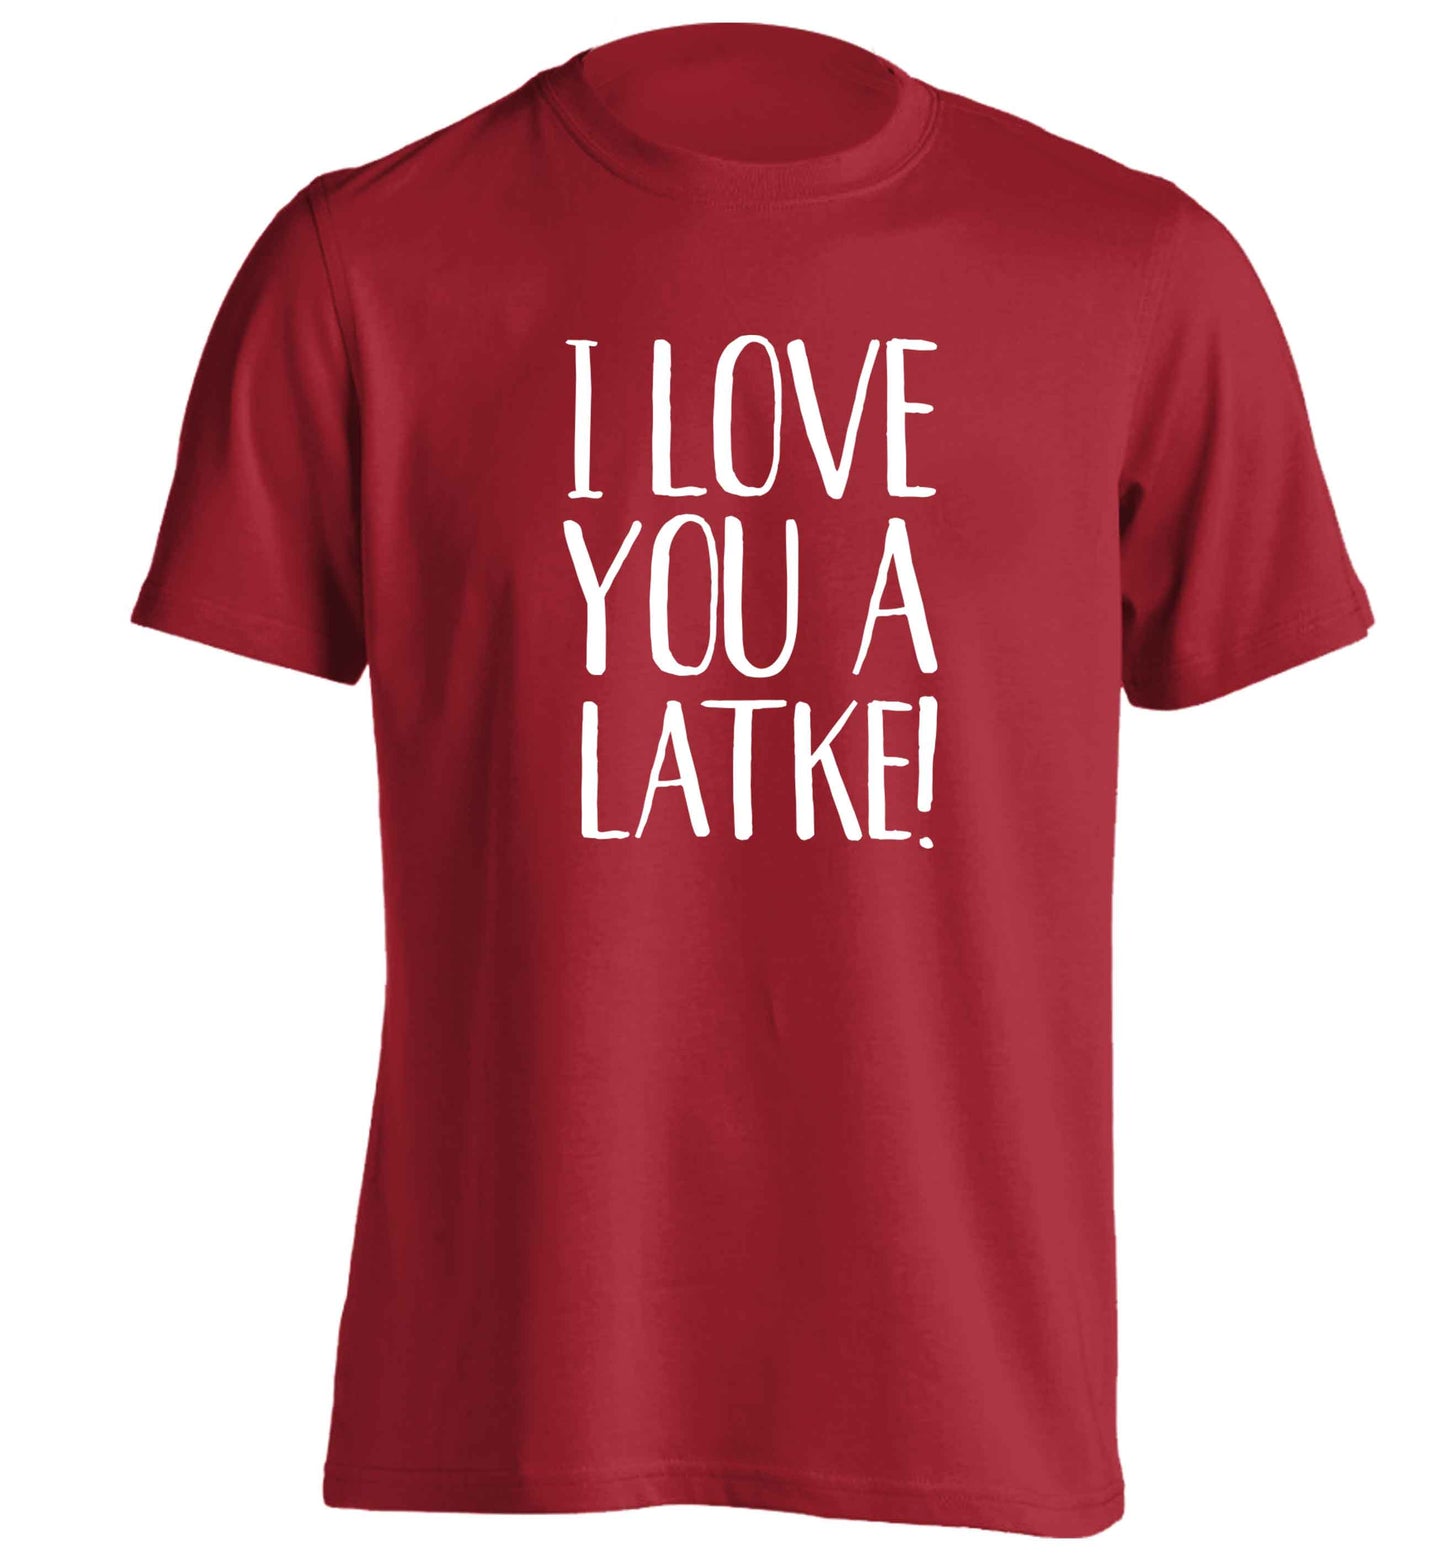 I love you a latke! adults unisex red Tshirt 2XL